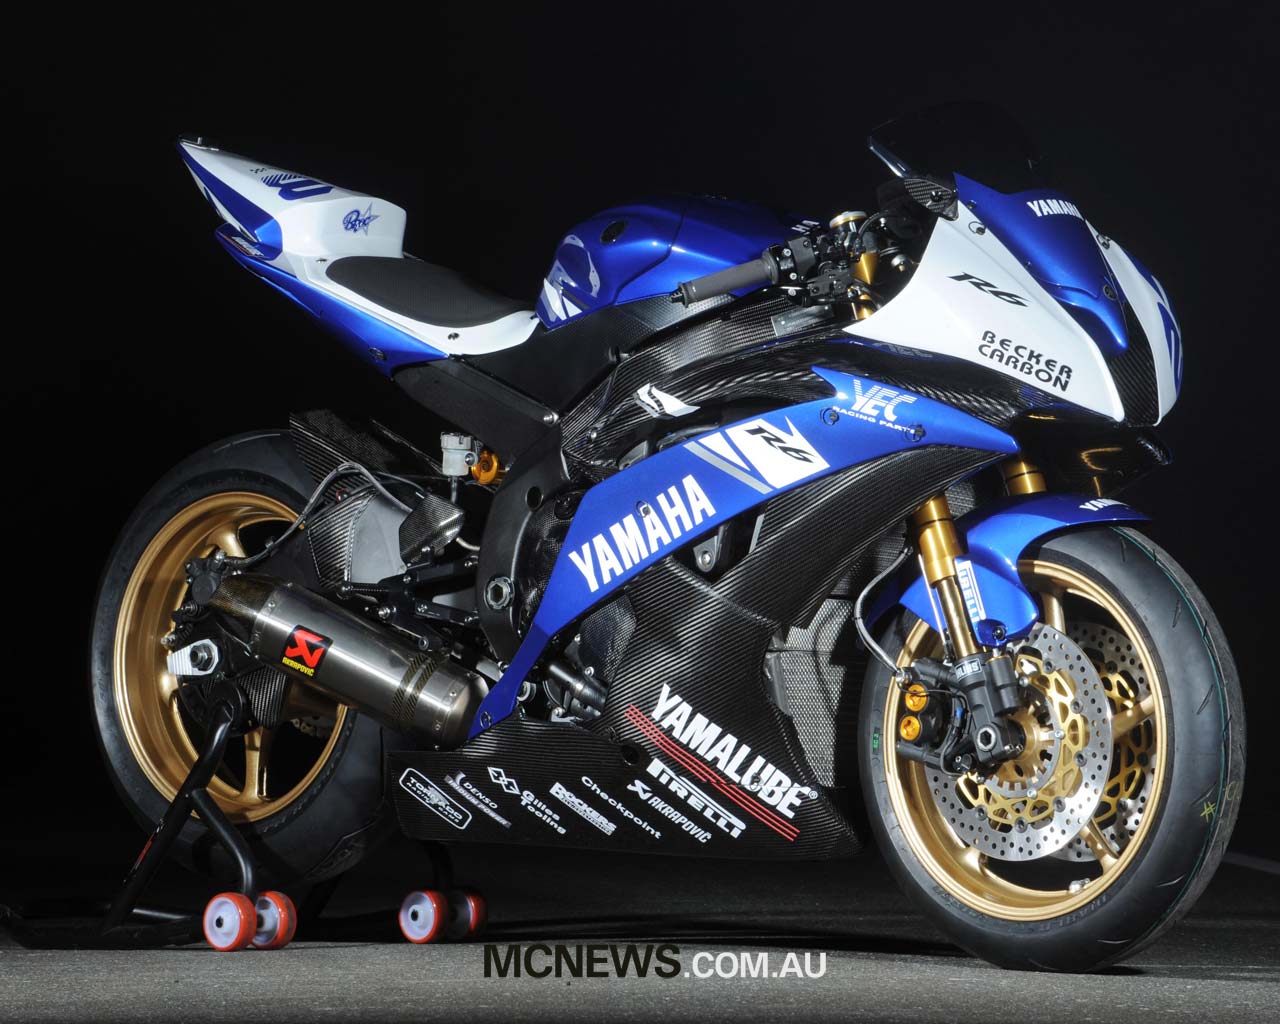 Kumpulan Download Gambar Motor Yamaha R15 Terbaru TeaModifikasi